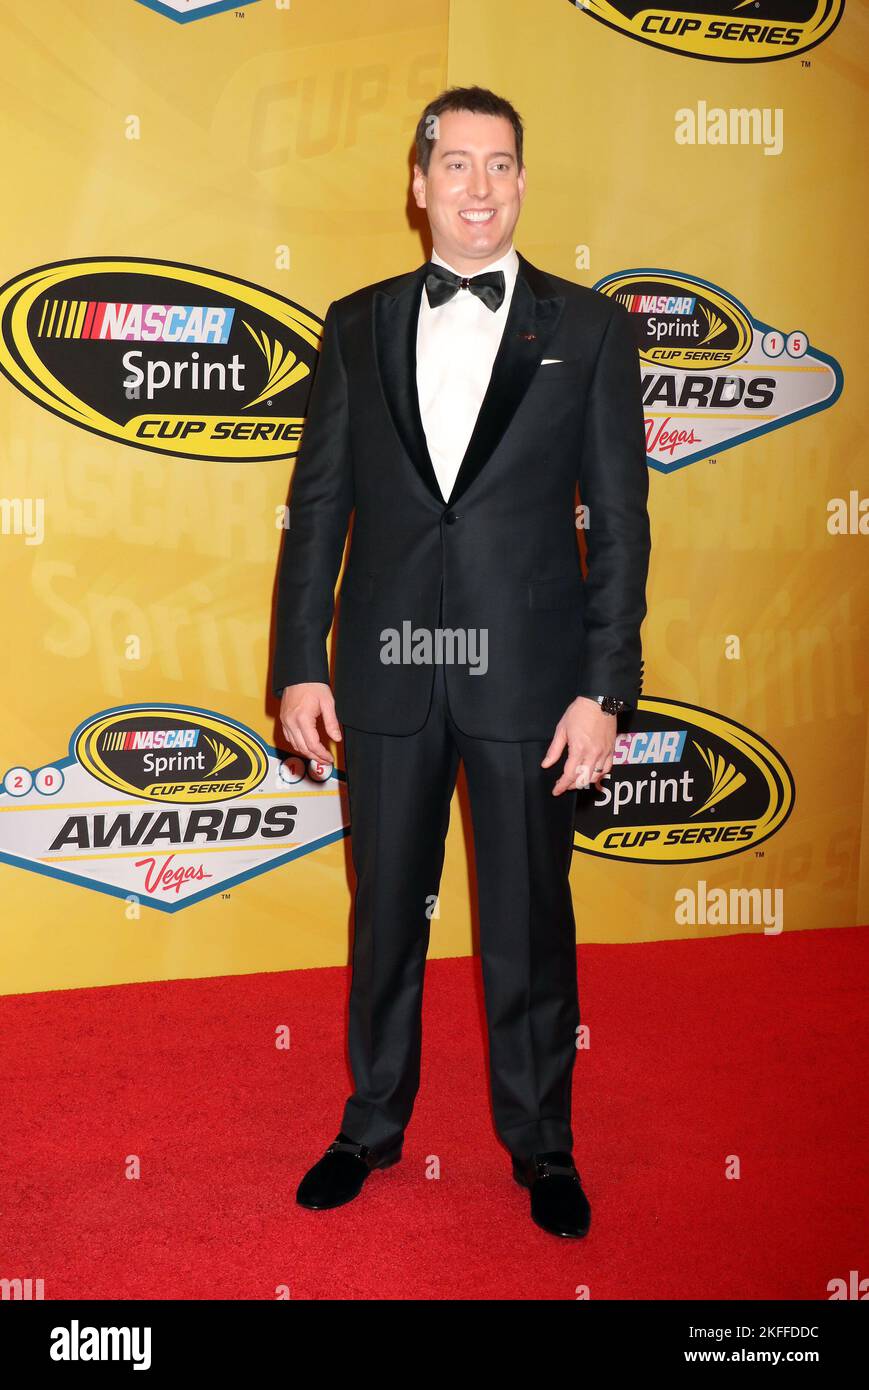 Kyle Busch partecipa ai NASCAR Sprint Cup Series Awards 2015 al Wynn Hotel & Casino di Las Vegas, 4th dicembre 2015. Foto Stock